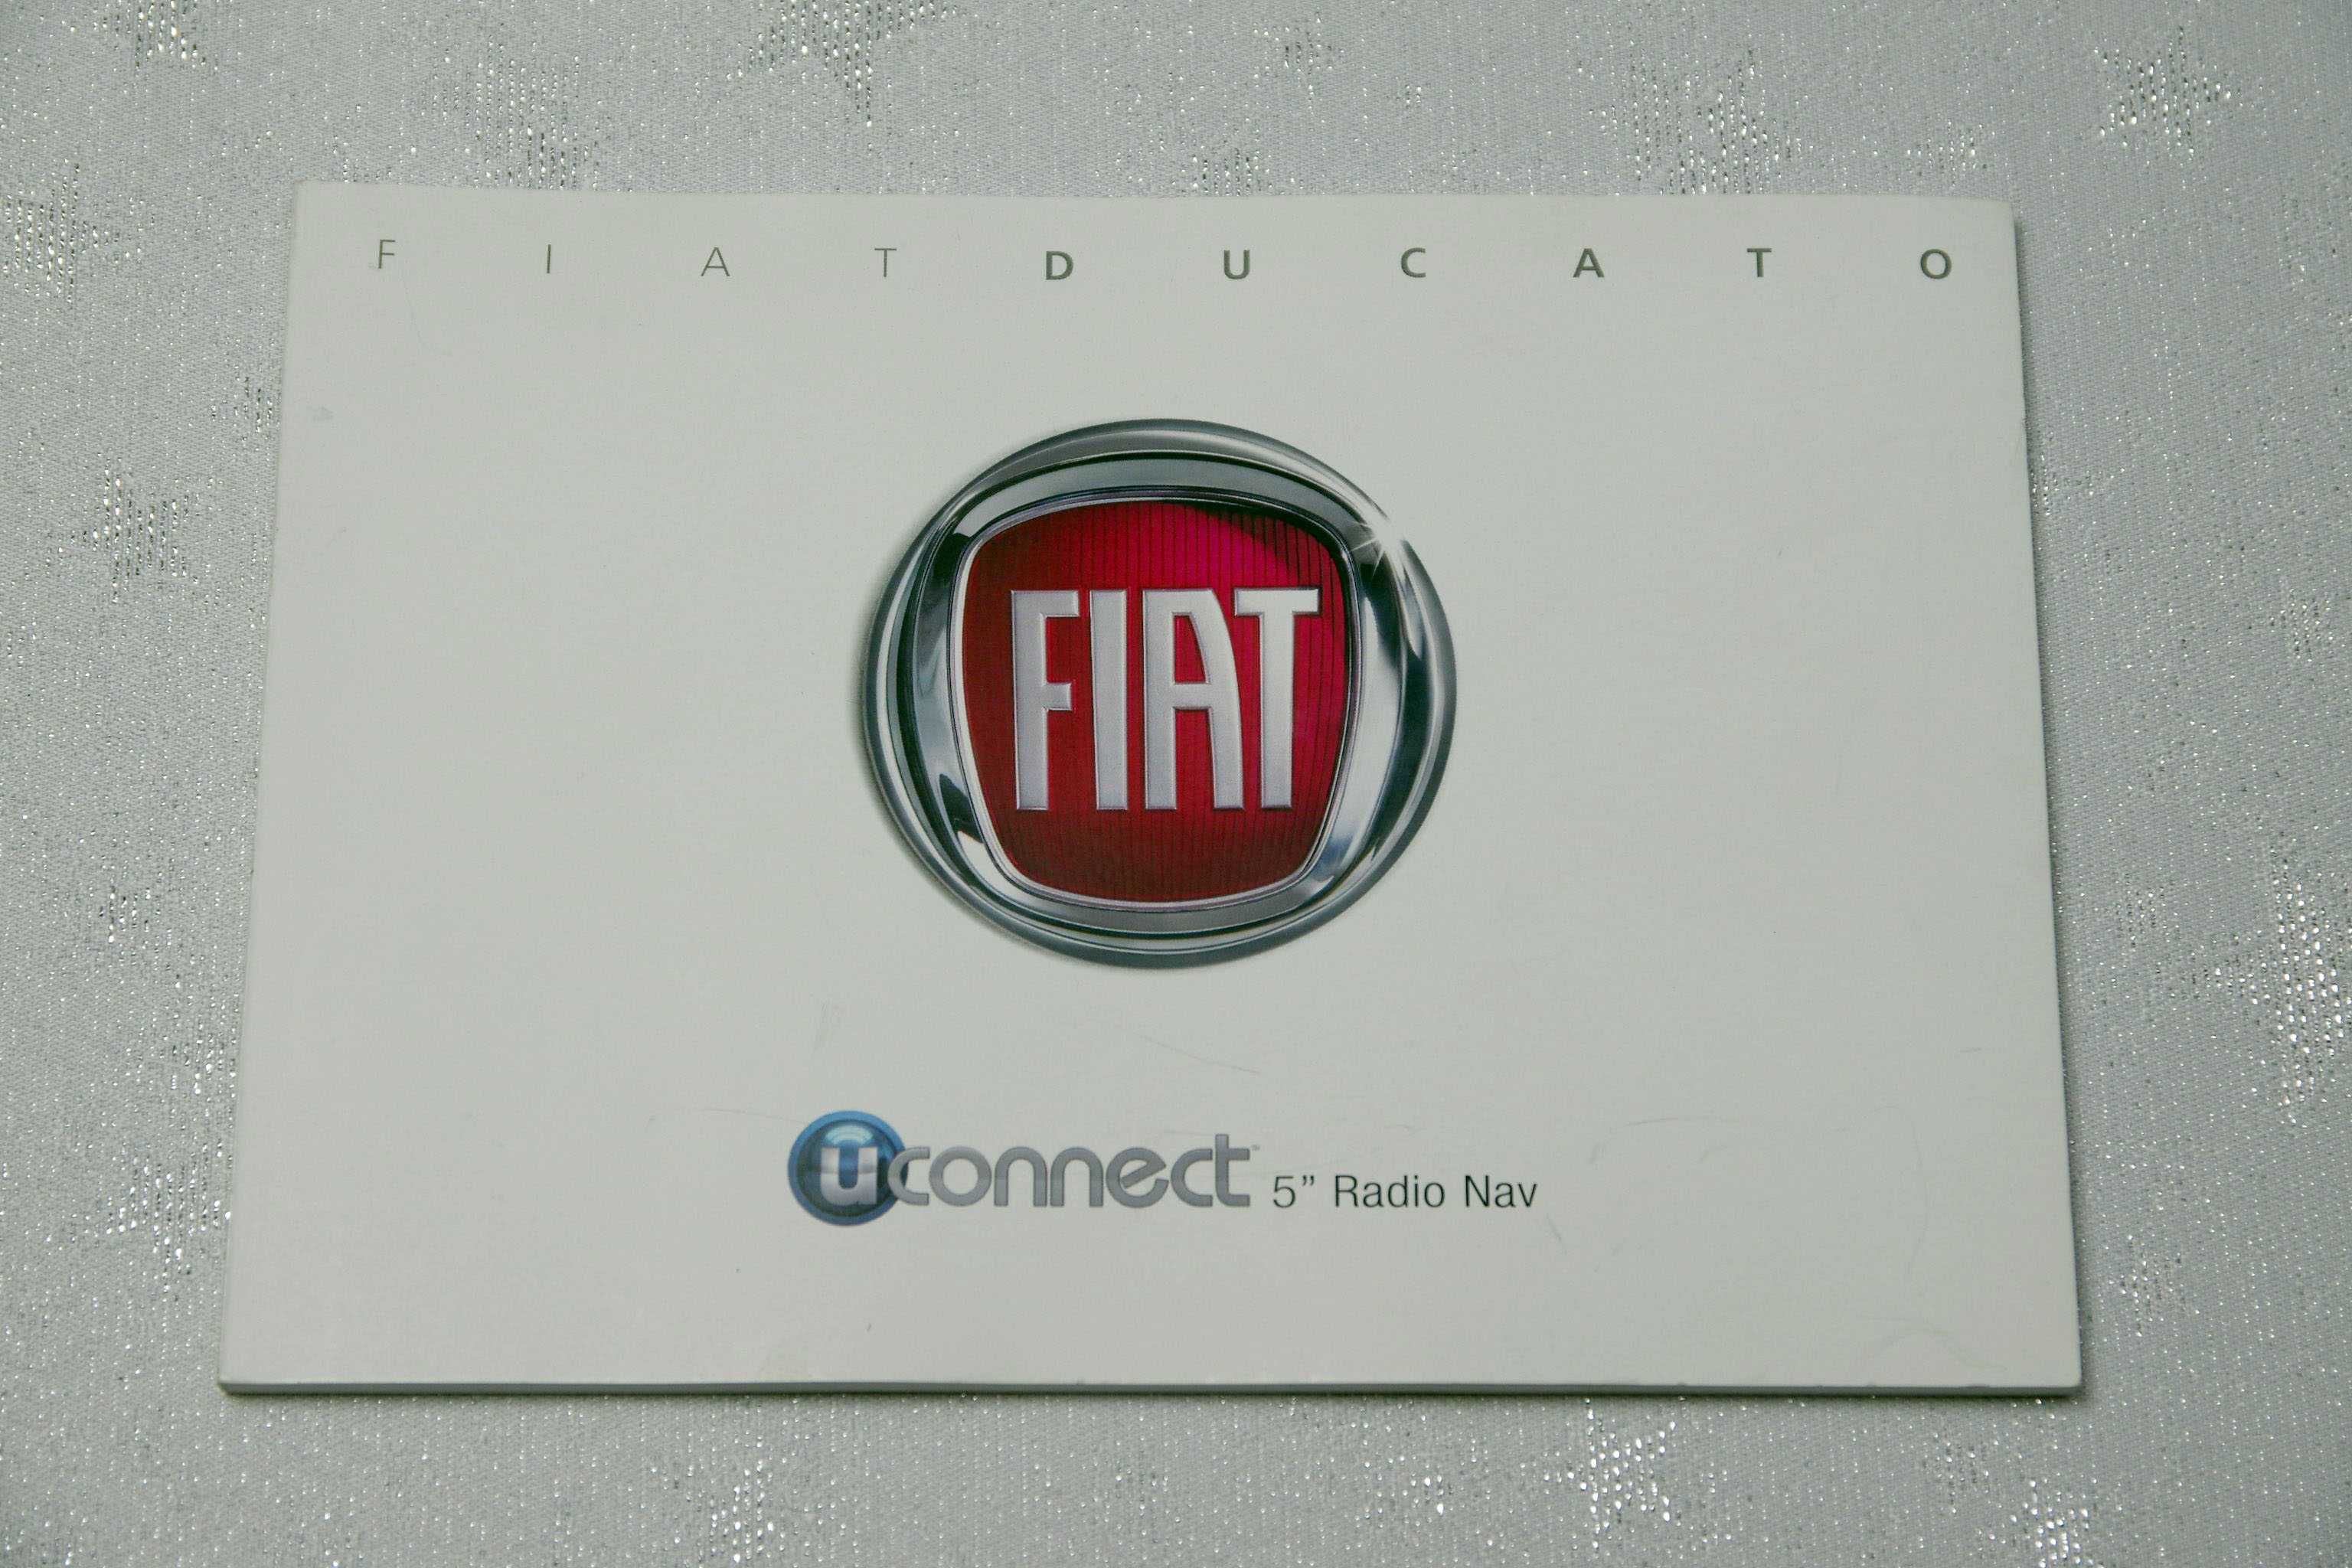 Instrukcja obsługi FIAT DUCATO Radio Nav uconnect 5"